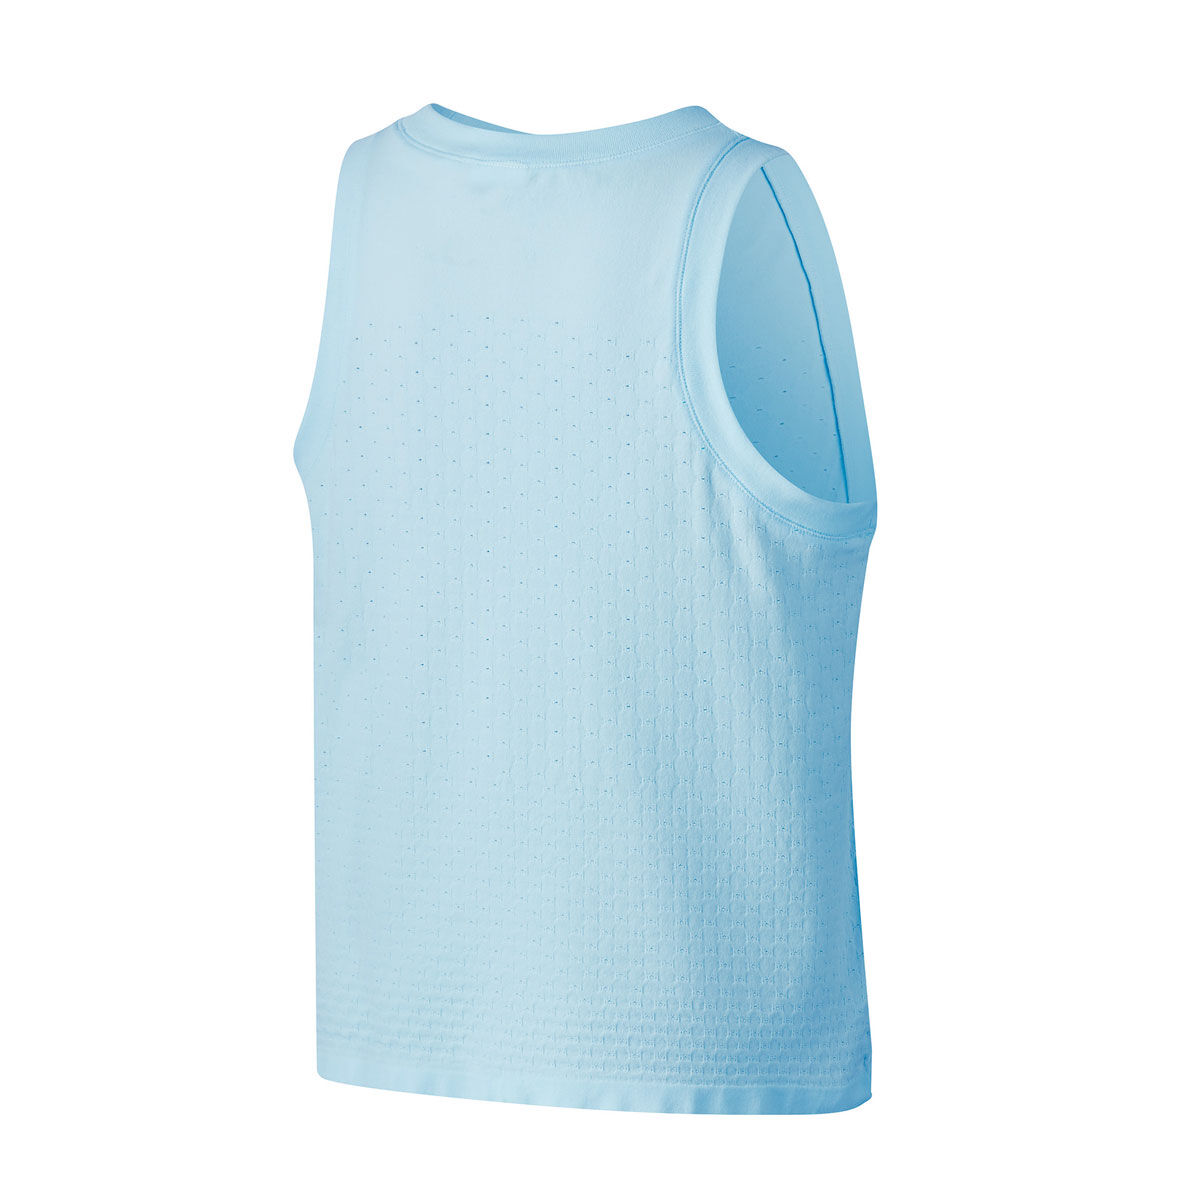 Dodger Athletics Blue Tank Top Sleeveless Nylon Jersey Shirt Womens S  Sharks 1